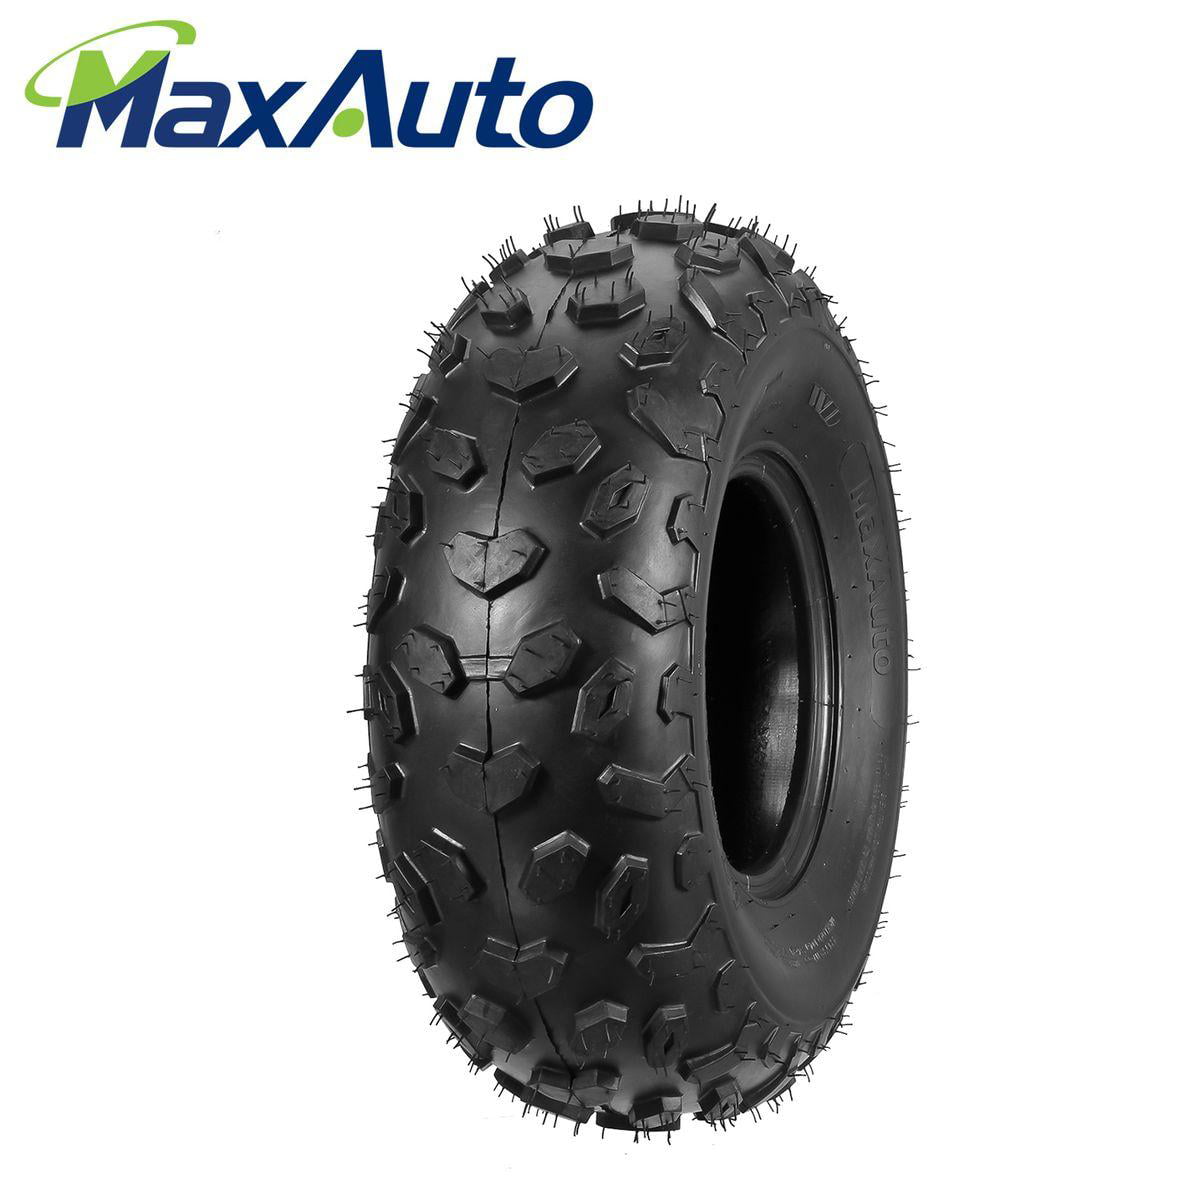 1Pc MaxAuto 21X8-9 ATV Tire 4 Ply Tubeless 20X11x9 4PR 